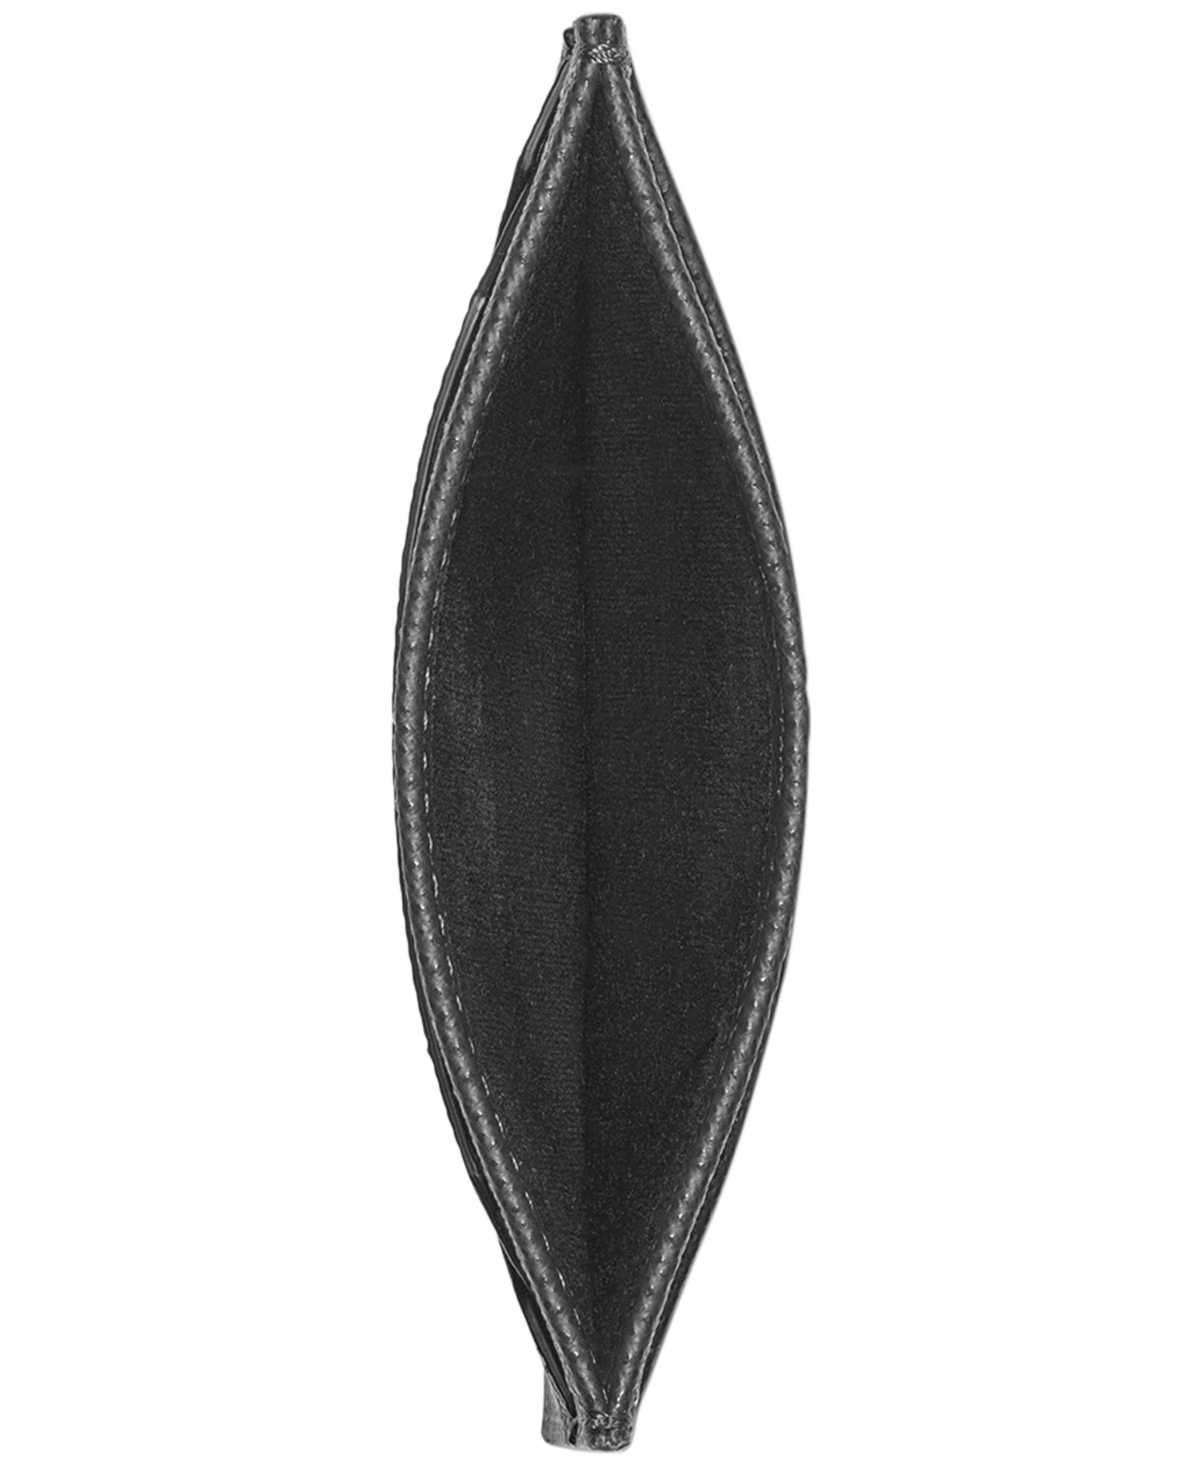 Shop Montblanc Sartorial Leather Card Holder In Black